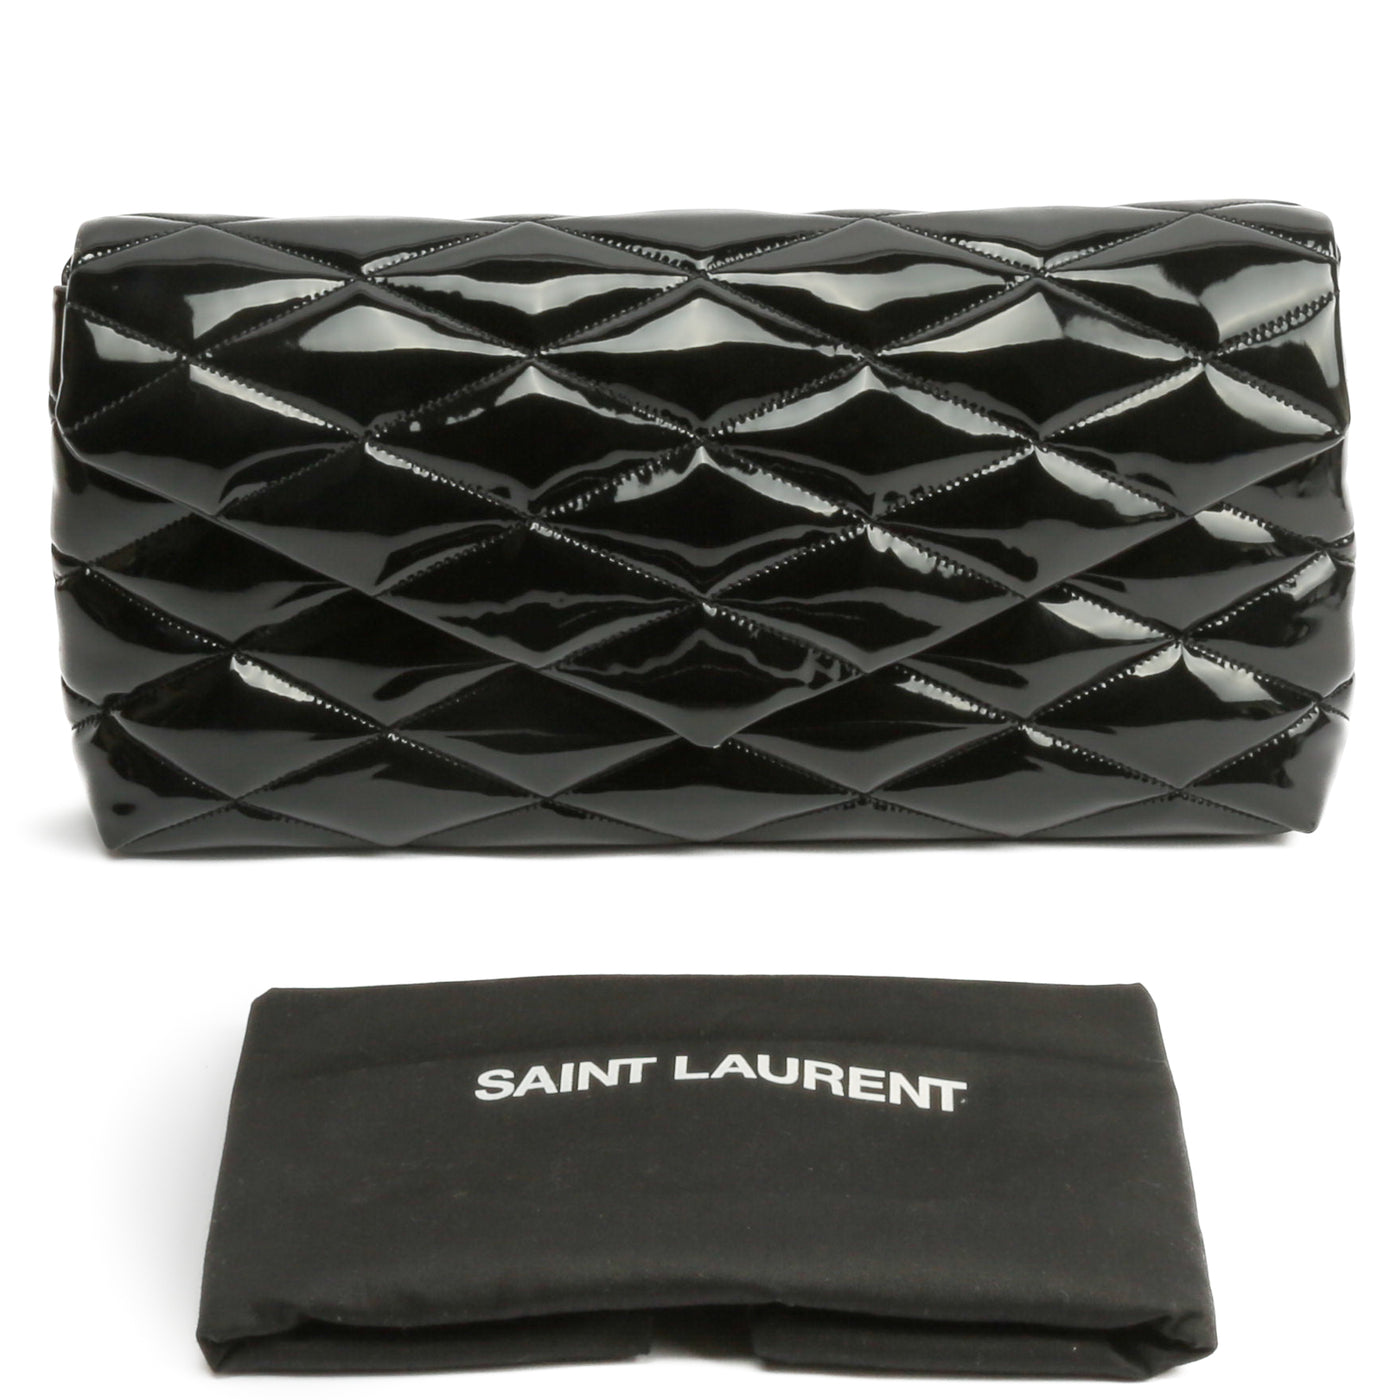 SAINT LAURENT Sade Puffy Patent Large Clutch - Black